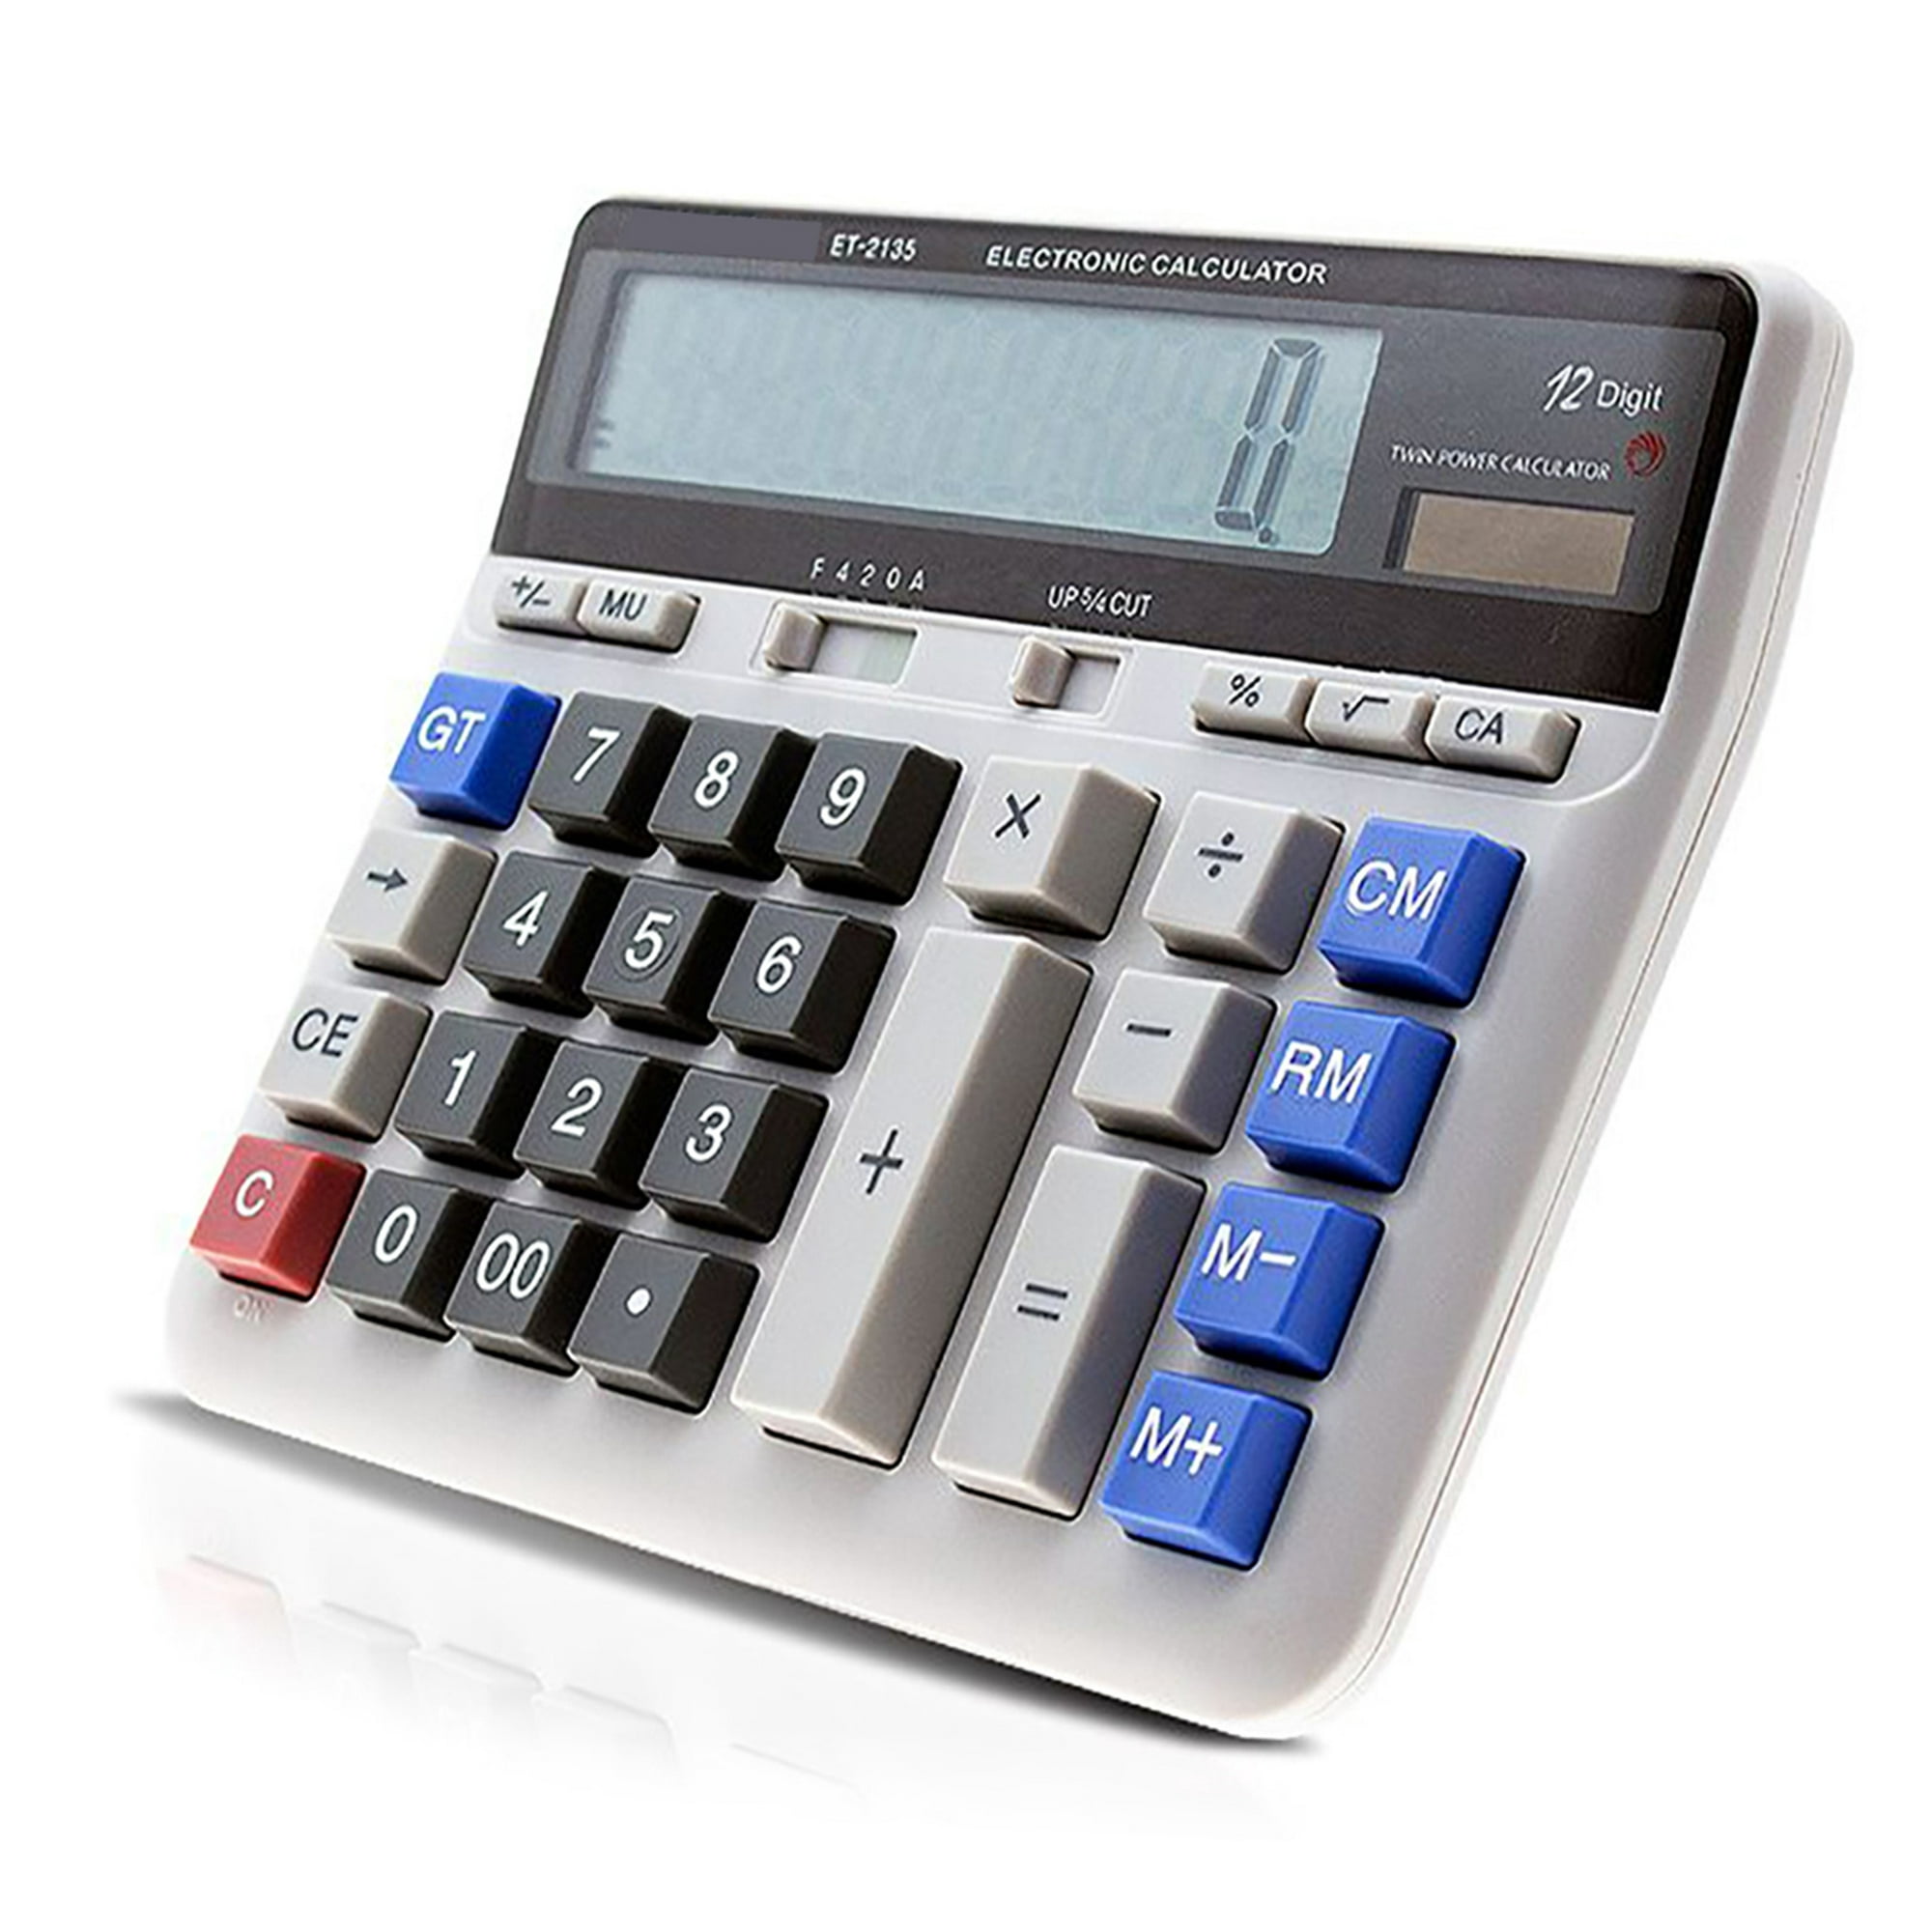 Comprar Supermercado calculadora y datáfono 26 pzas Deluxe Supermer